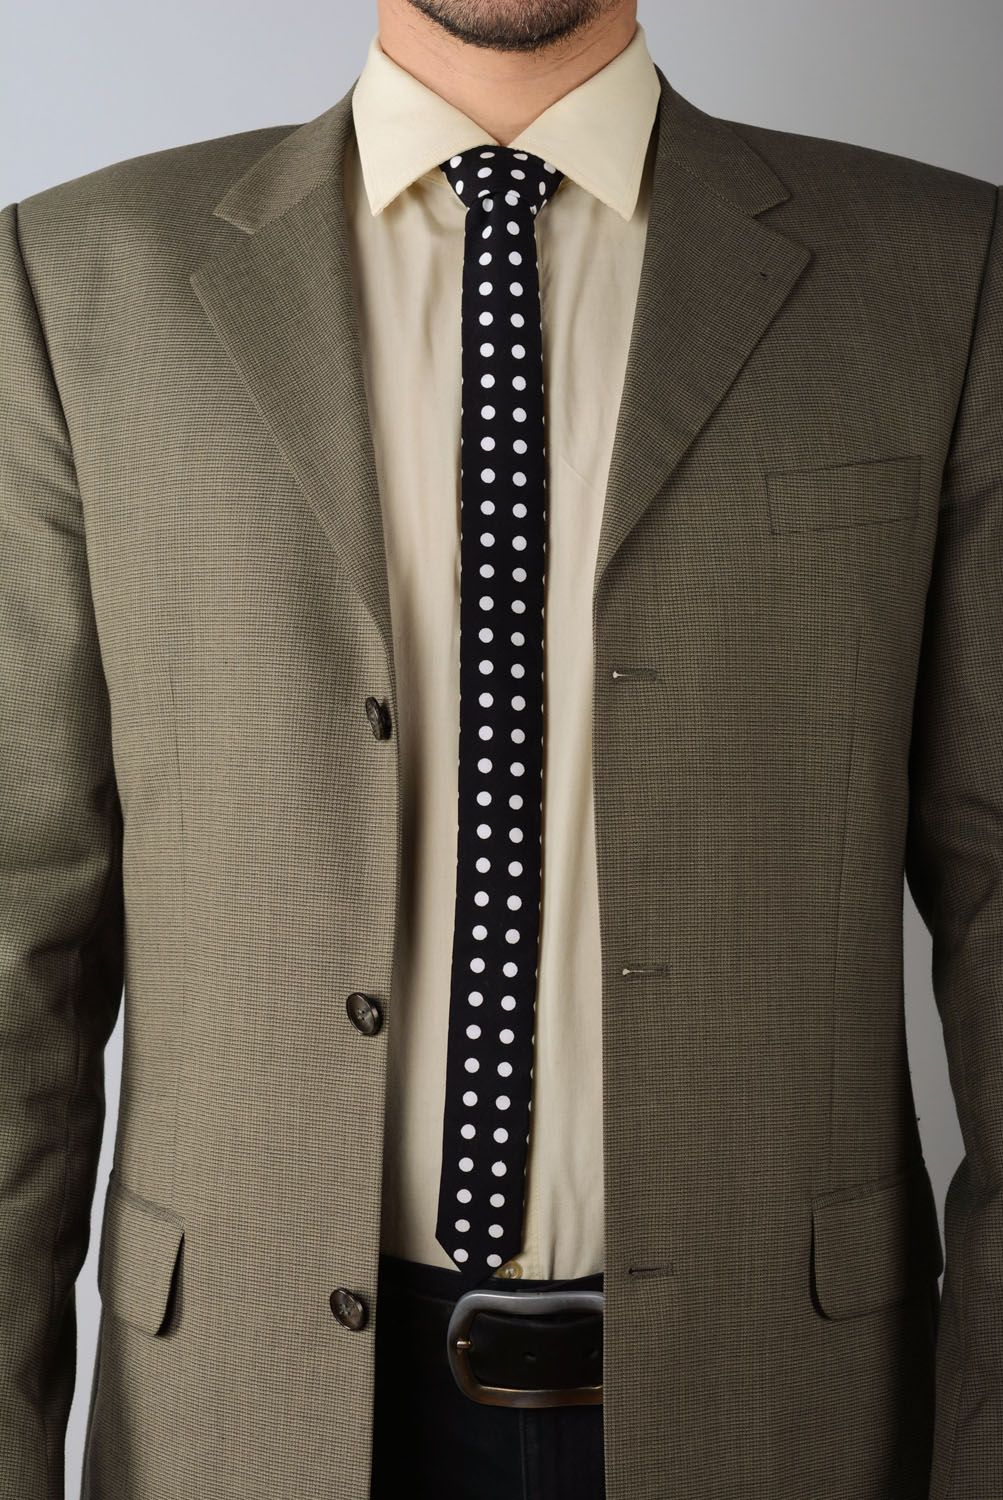 Black tie with polka dots photo 1